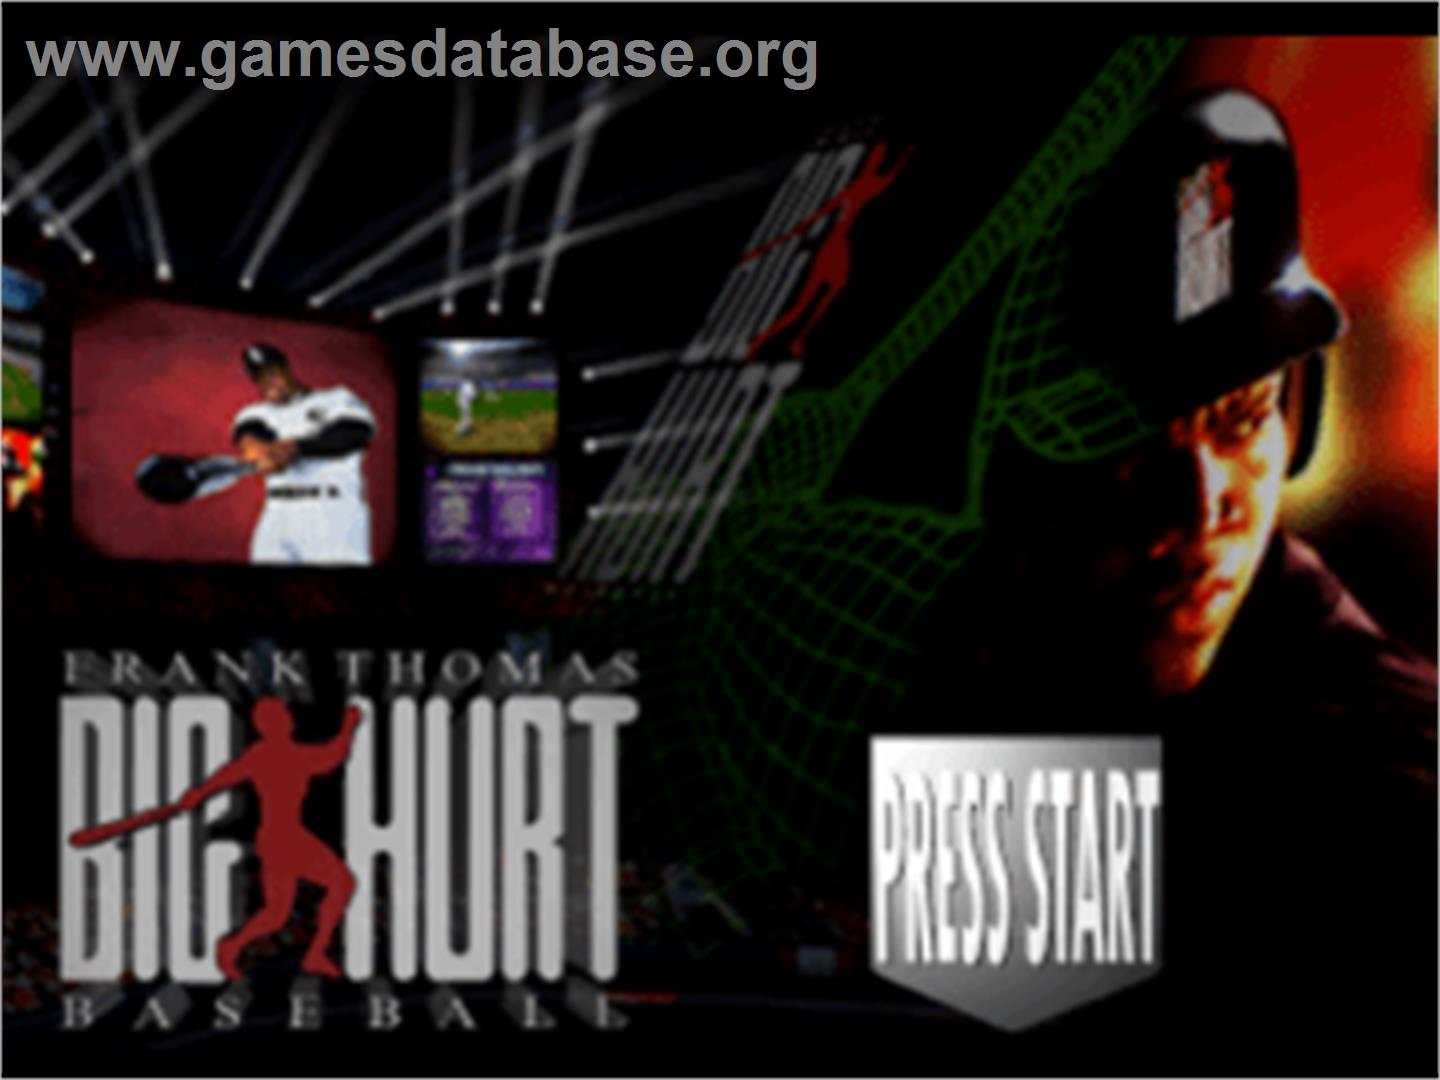 Frank Thomas Big Hurt Baseball - Sony Playstation - Artwork - Title Screen